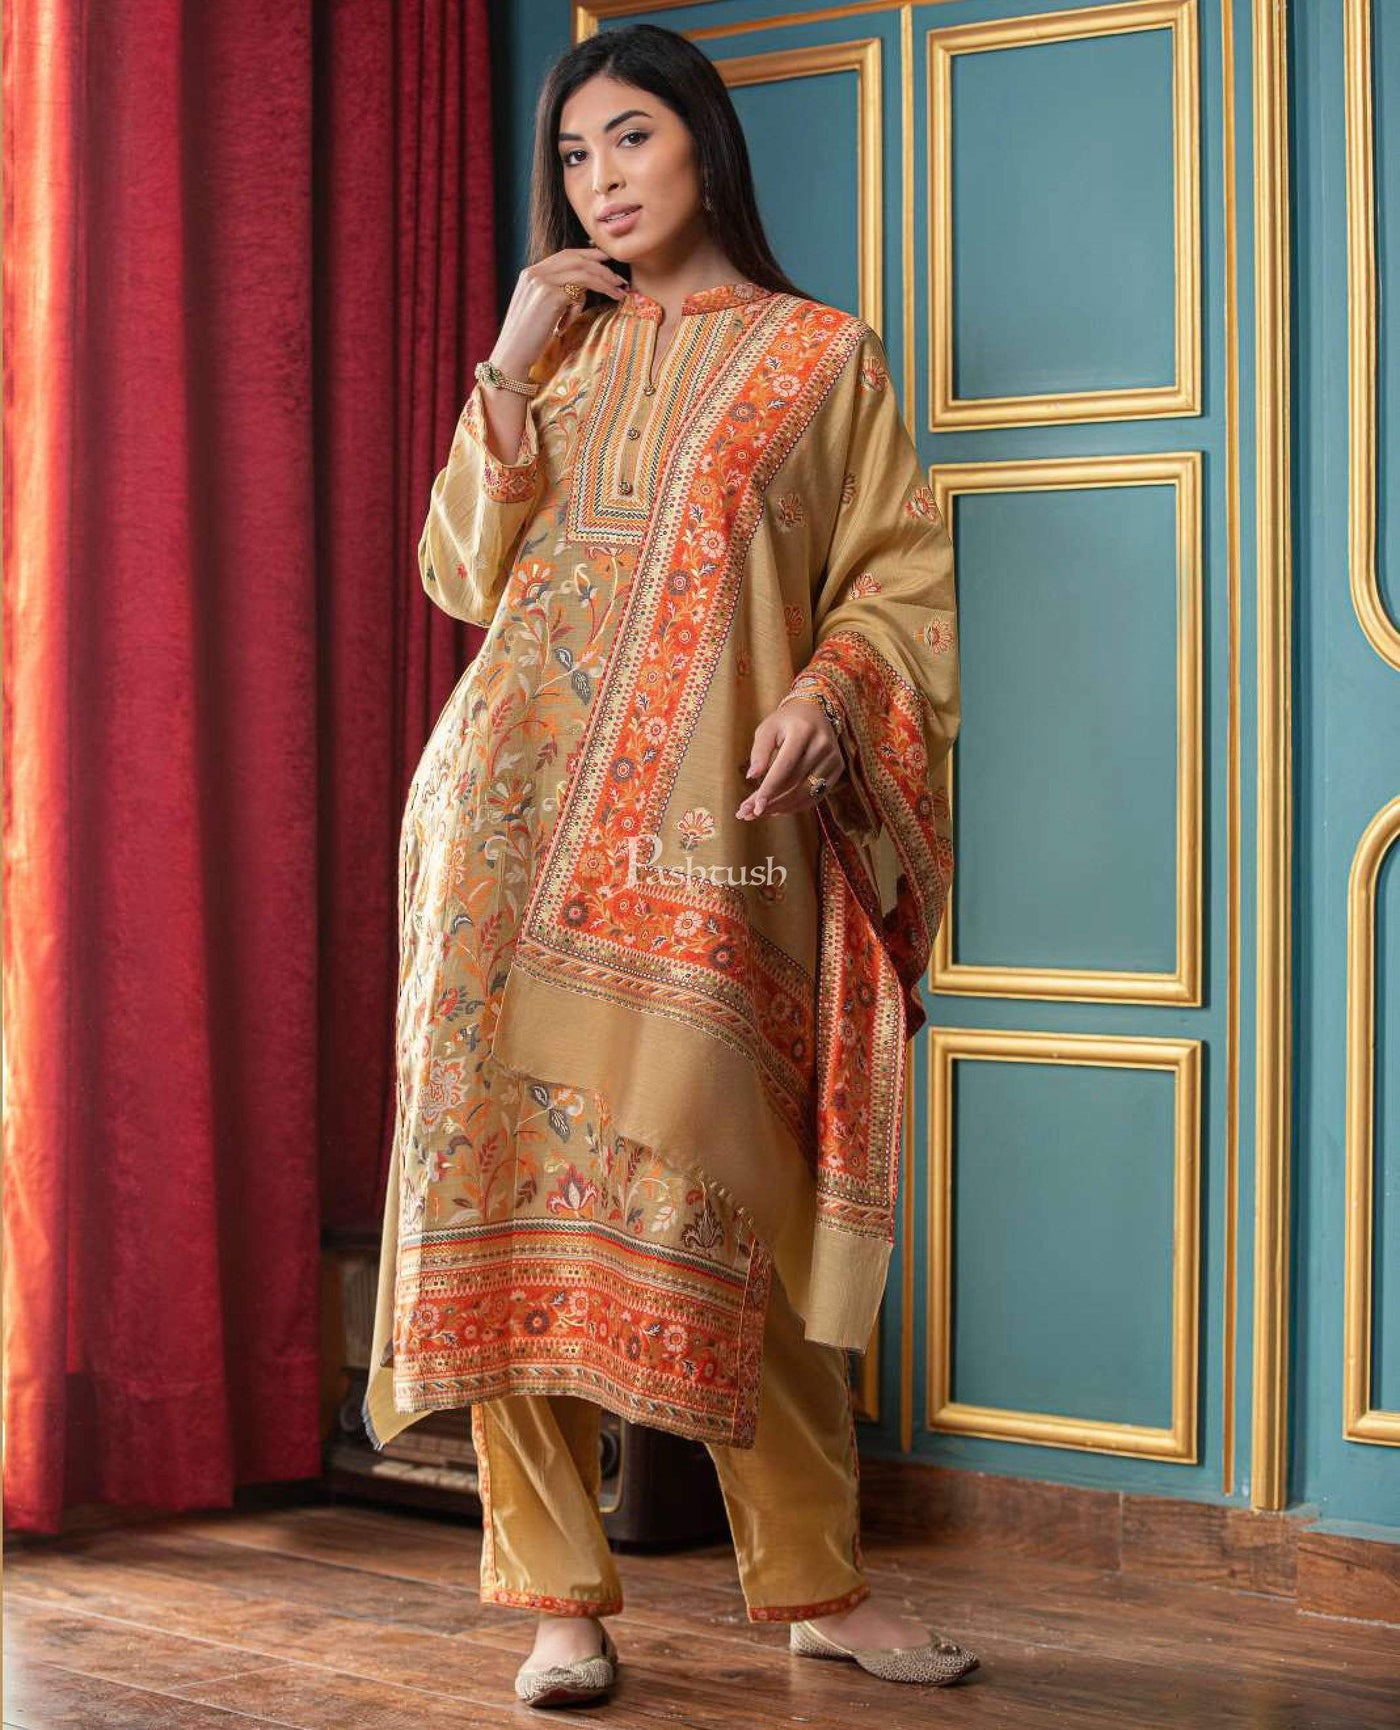 Pashtush India suit Pashtush Womens Suit with Ethnic Weave Cotton-Silk, Unstitched, Sun-kissed Hue